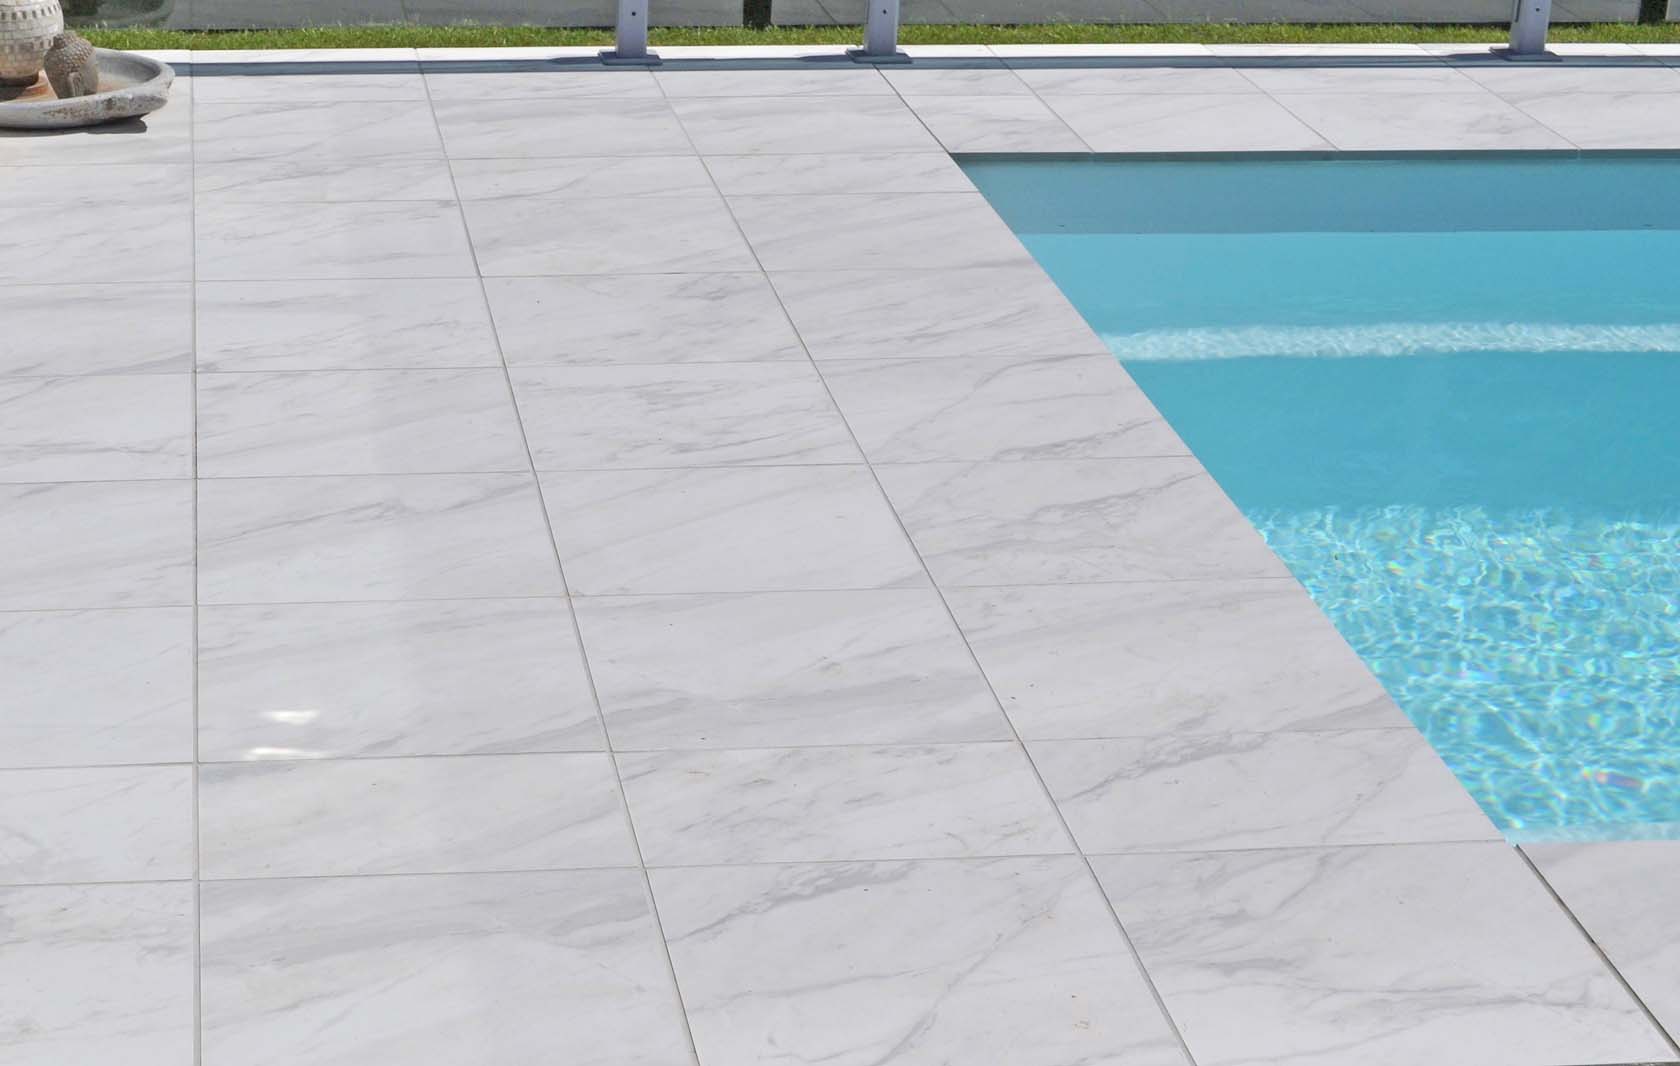 Carrara Marblano Porcelain pool coping and surround tiles